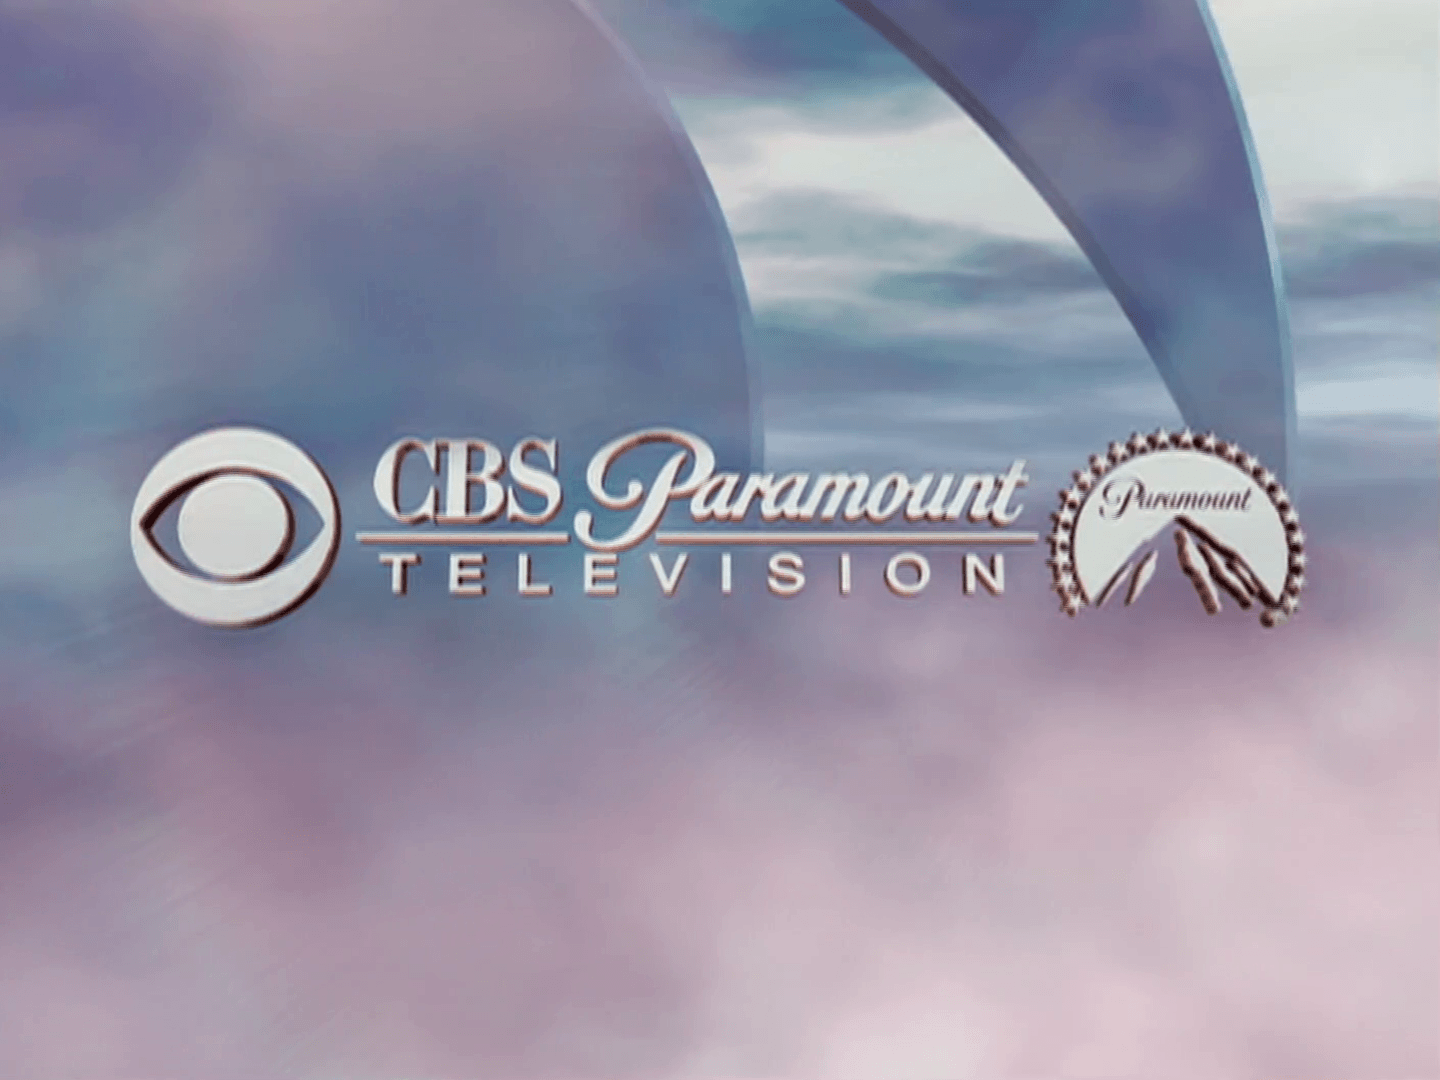 Paramount Television Logo - CBS Paramount Television Other